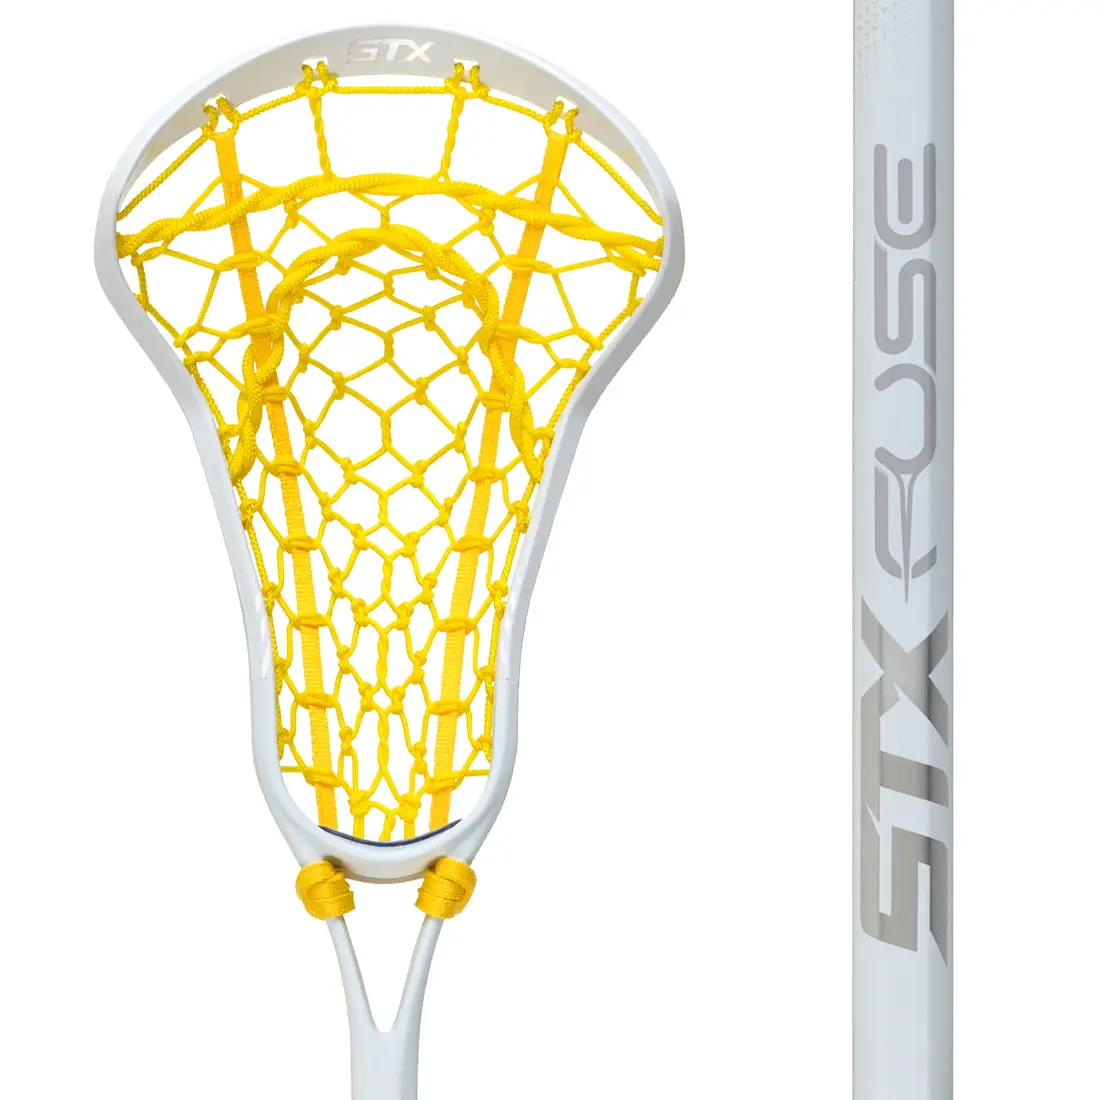 stx fuse women's lacrosse stick with lock pocket